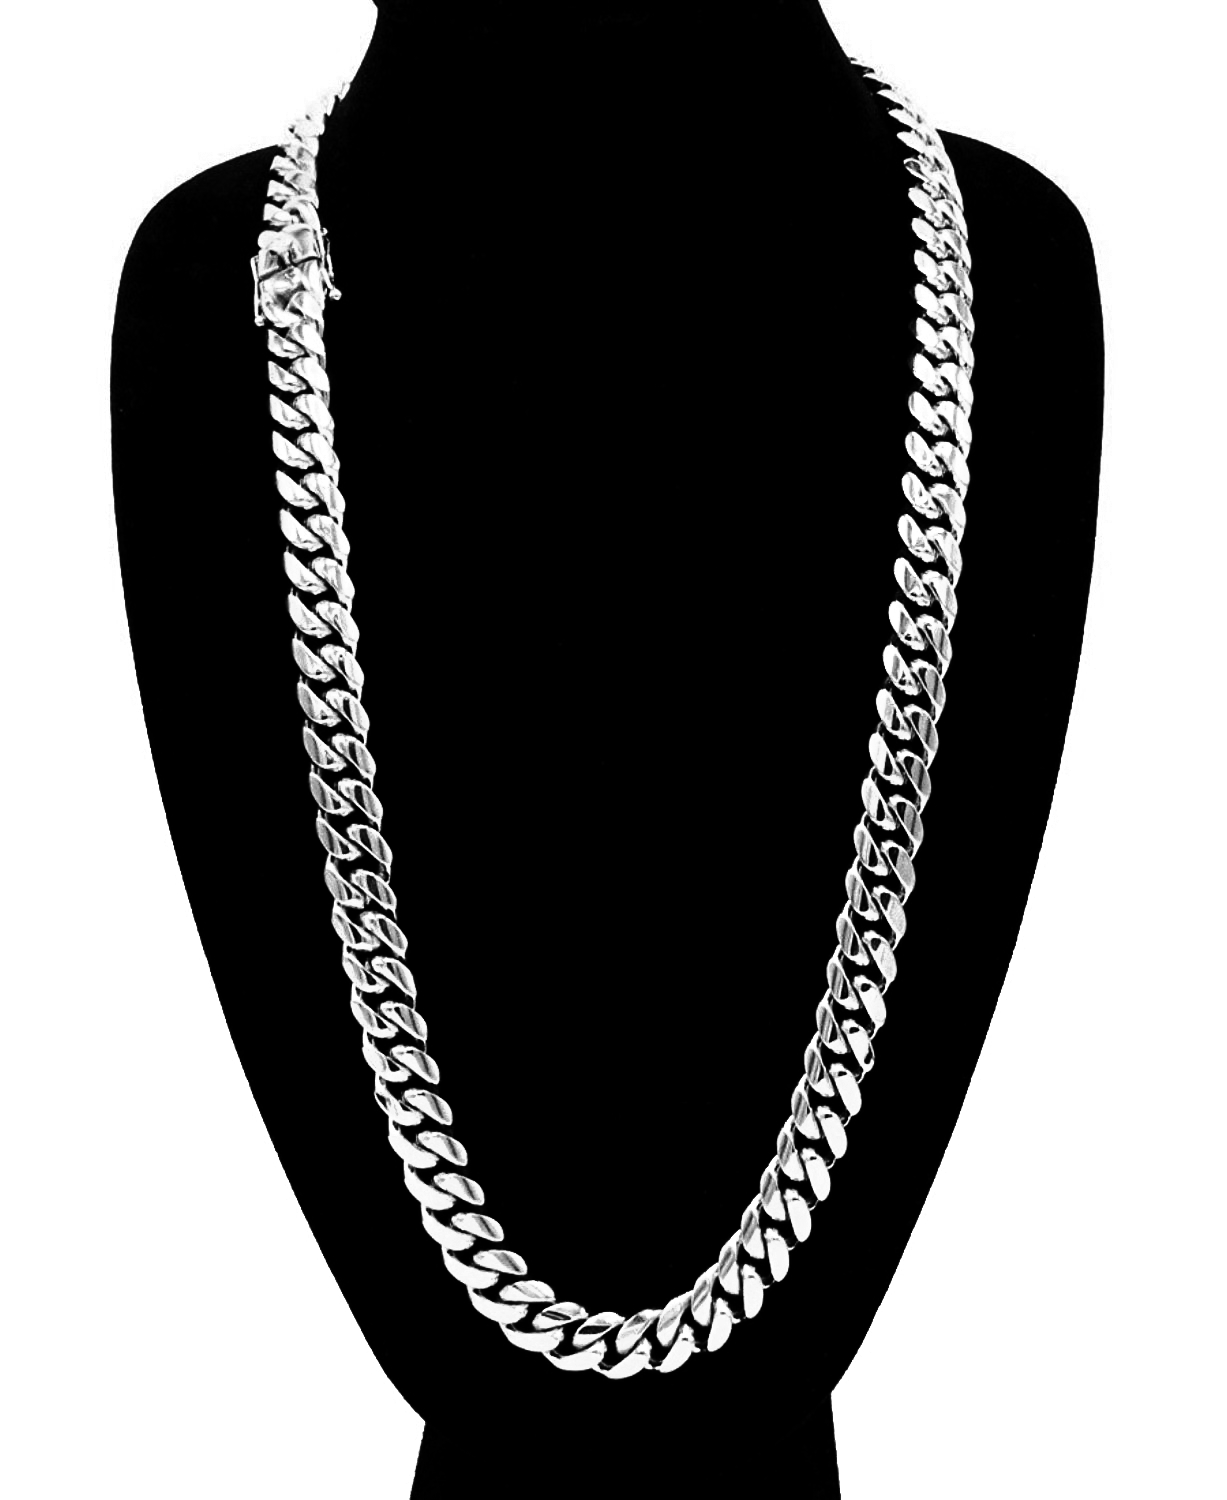 14k gold ep cuban mens necklace 12mm wide 84 grams